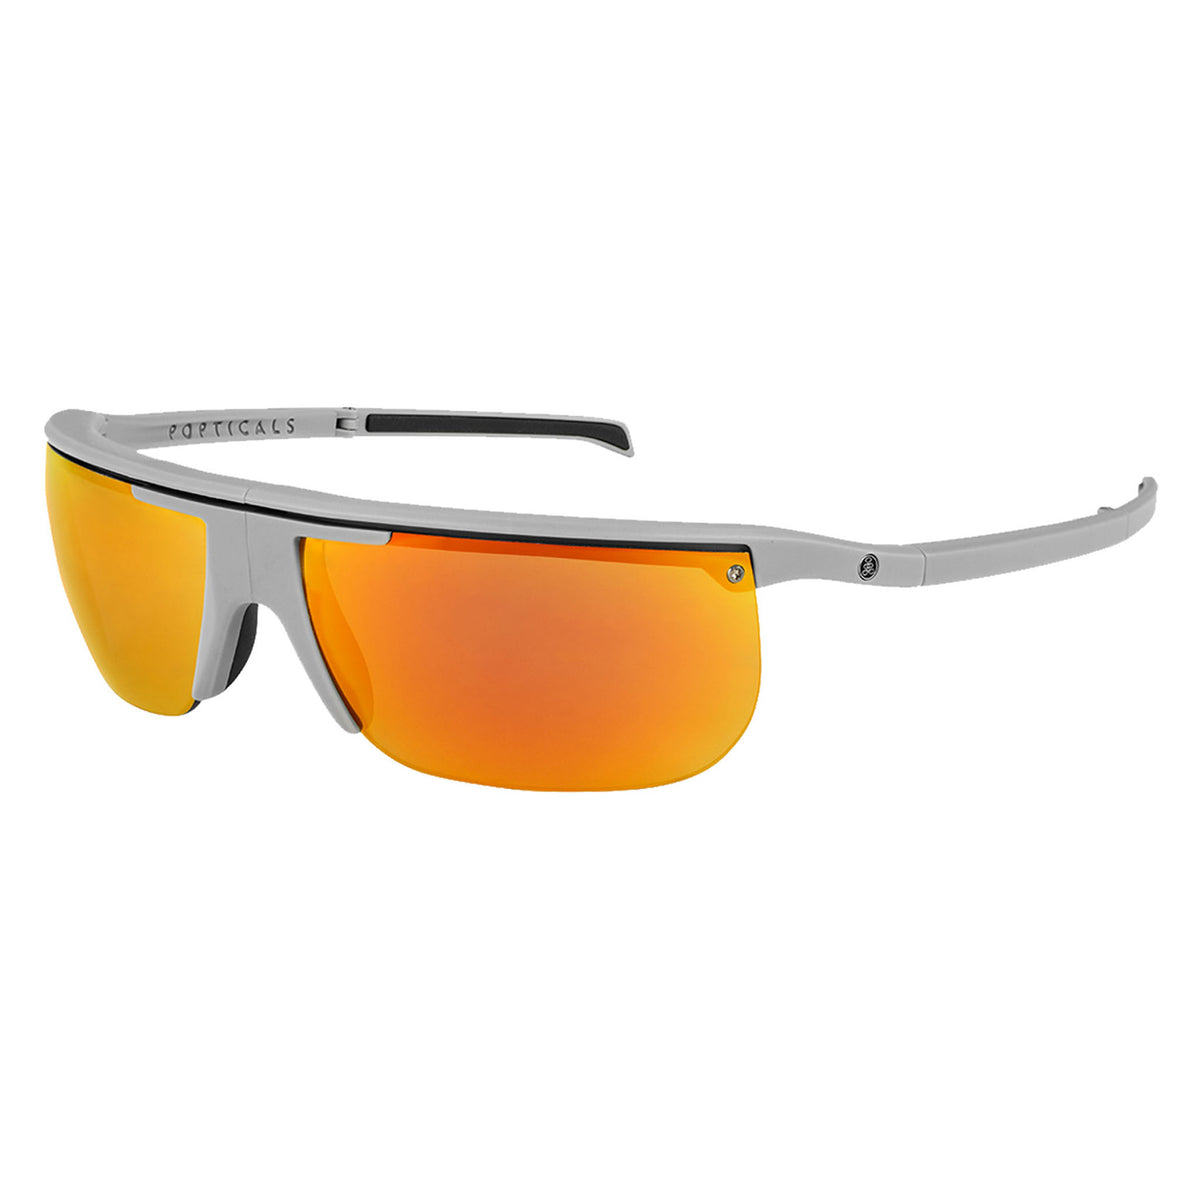 Popticals, Premium Compact Sunglasses, PopArt, 010030-GMON, Polarized Sunglasses, Matte Gray Frame, Gray Lenses with Orange Mirror Finish, Glam View